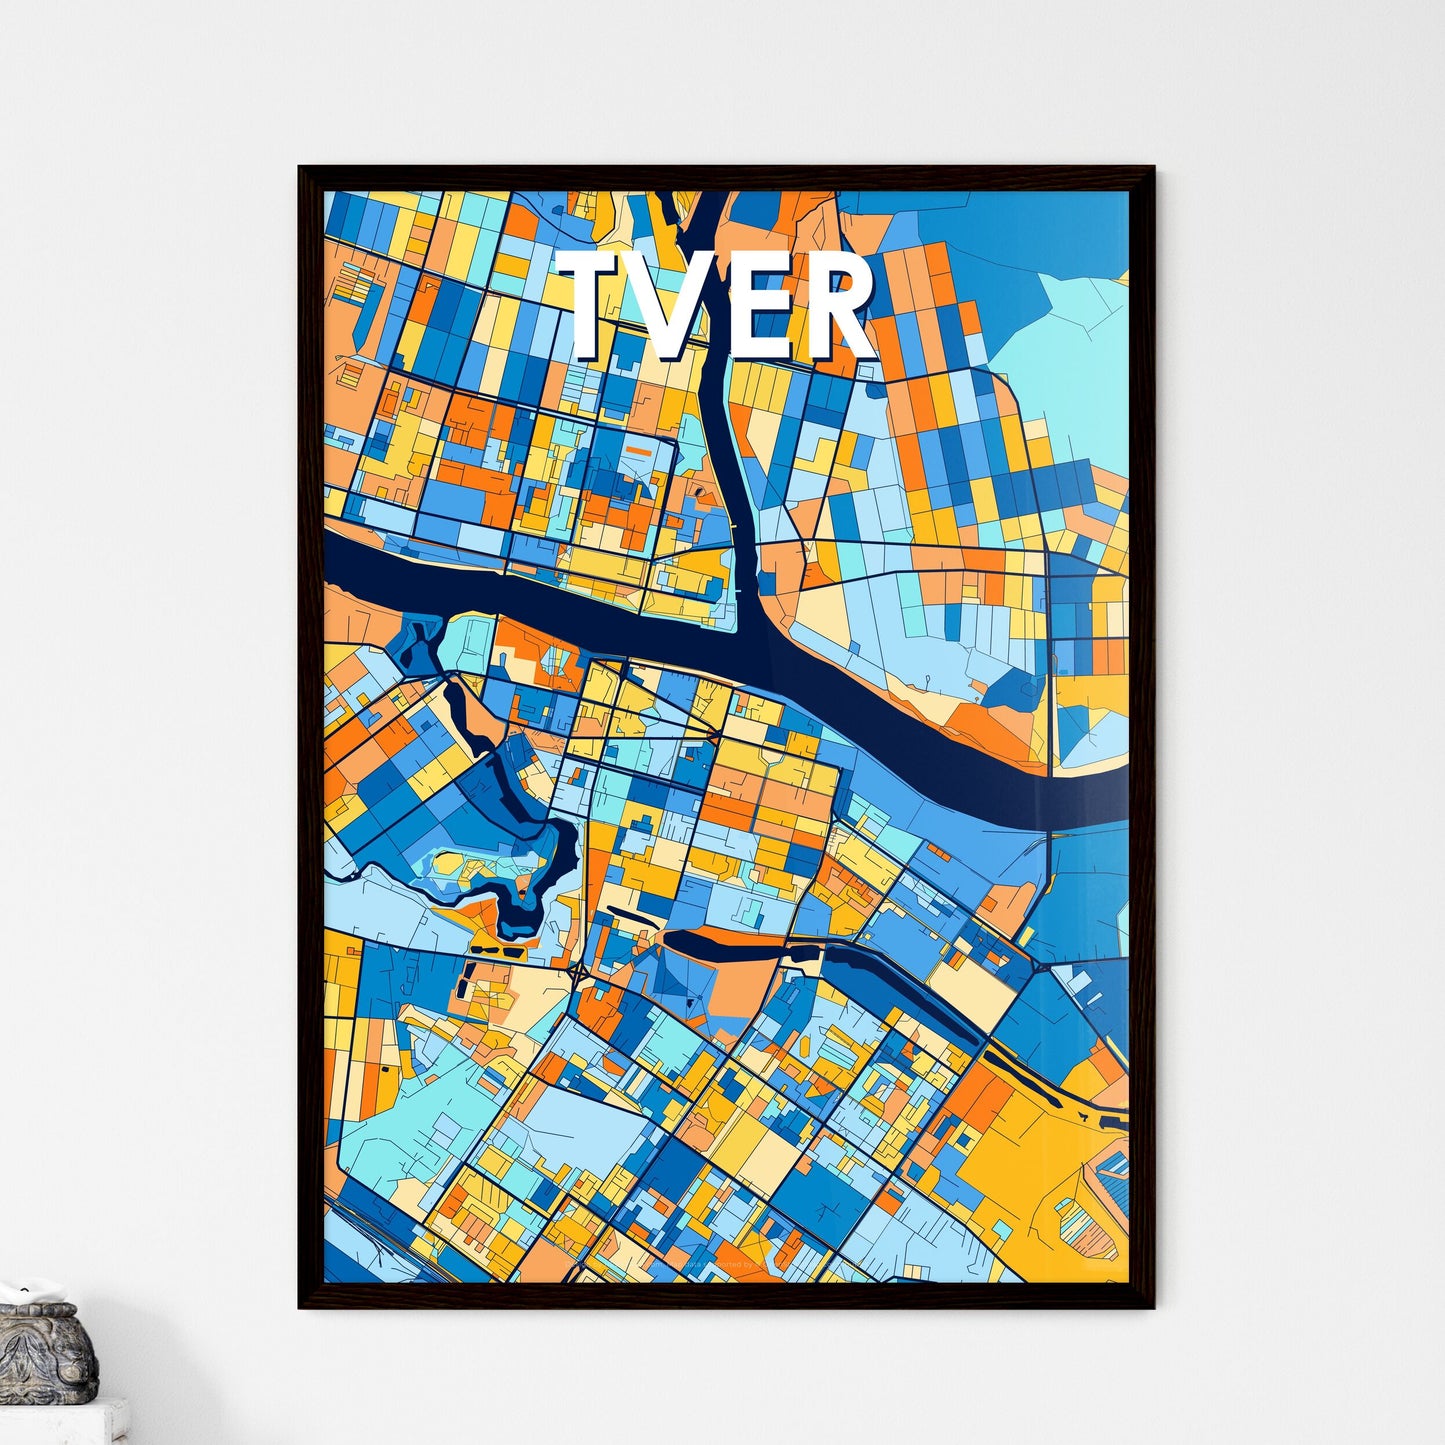 TVER RUSSIA Vibrant Colorful Art Map Poster Blue Orange